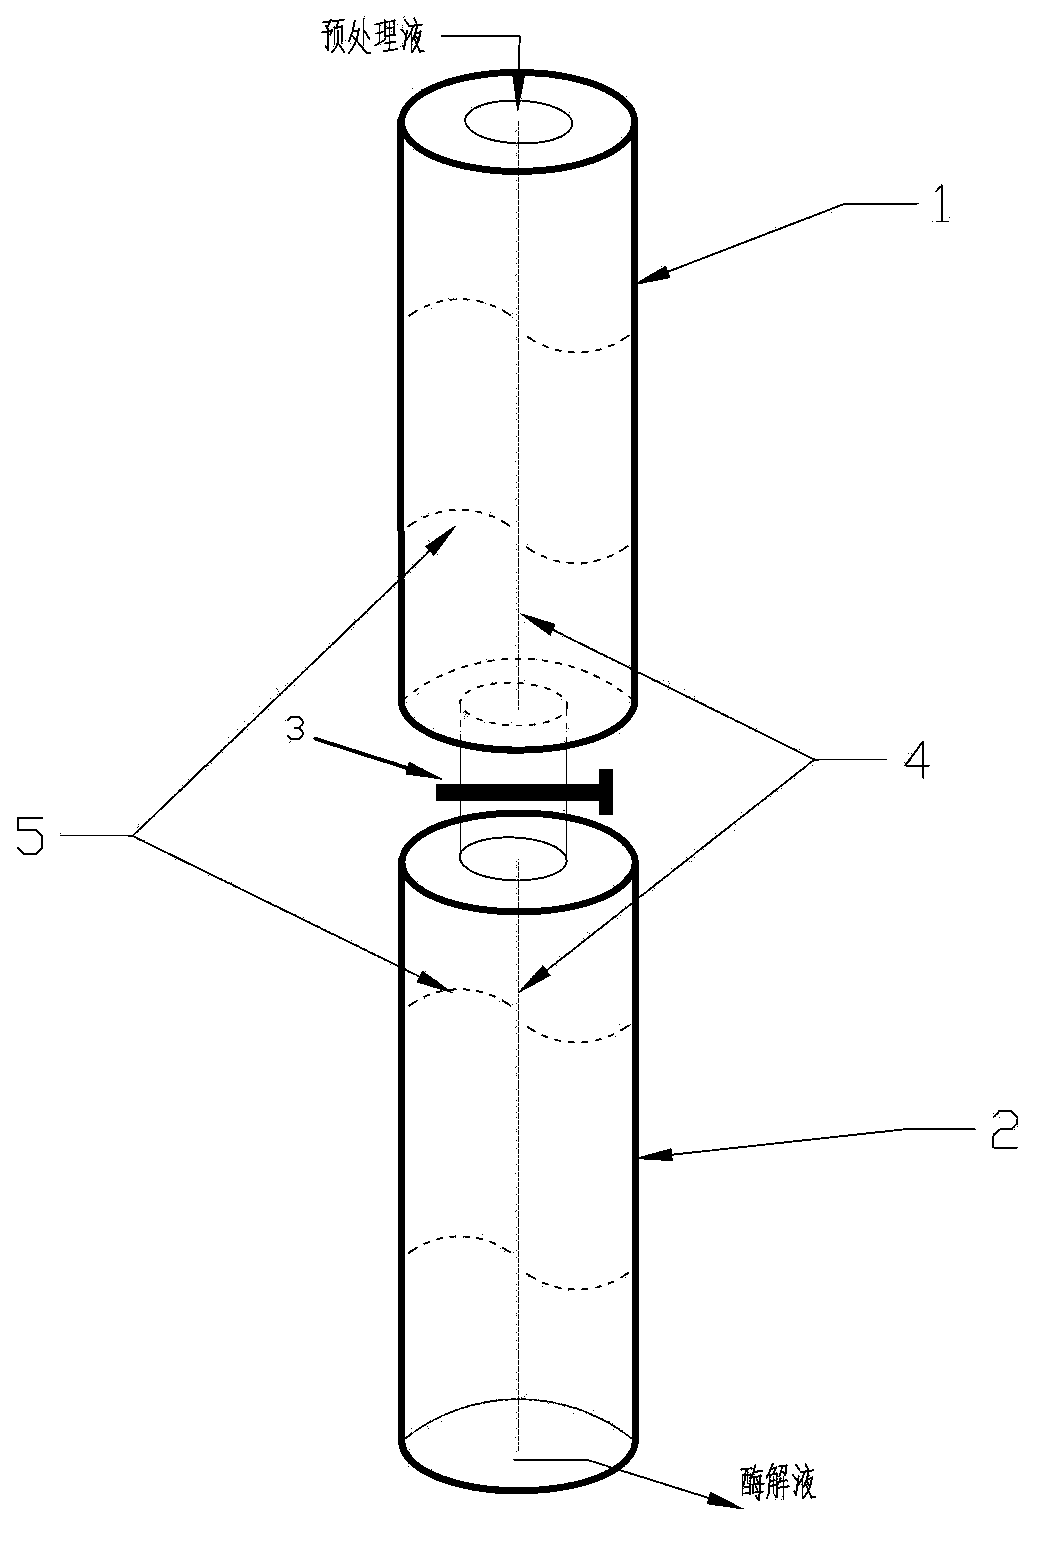 Preparation method of high-F-value tuna oligopeptide